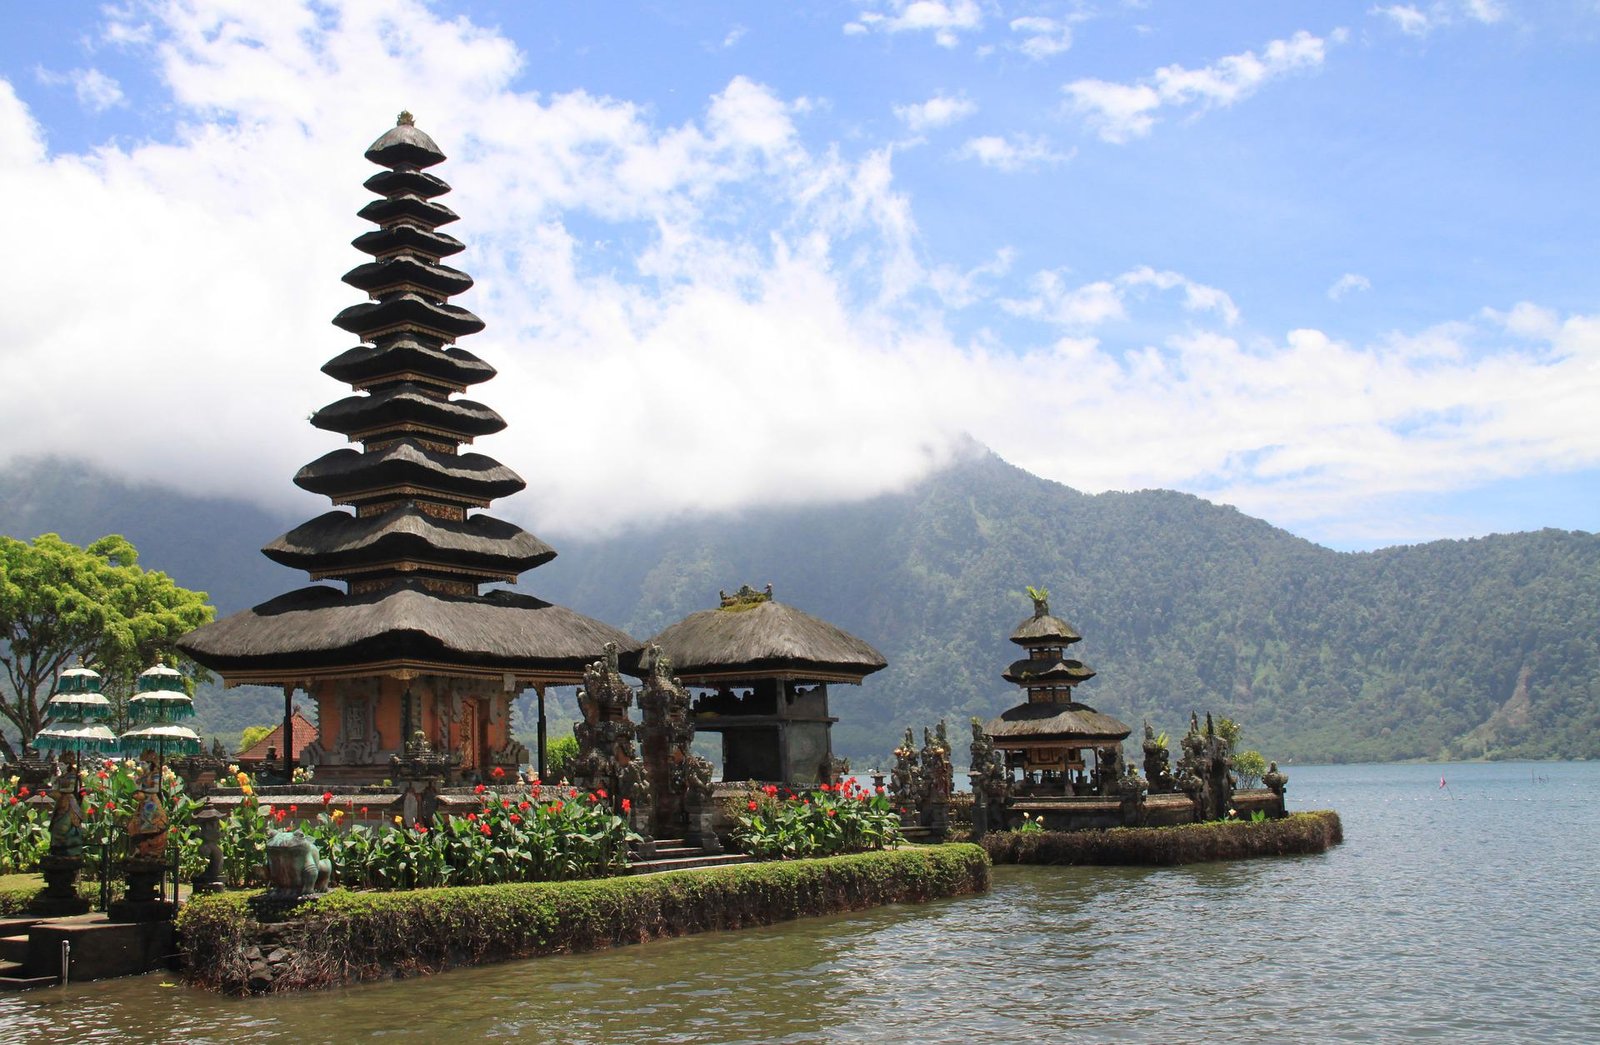 Temple in Bali, Indonesia